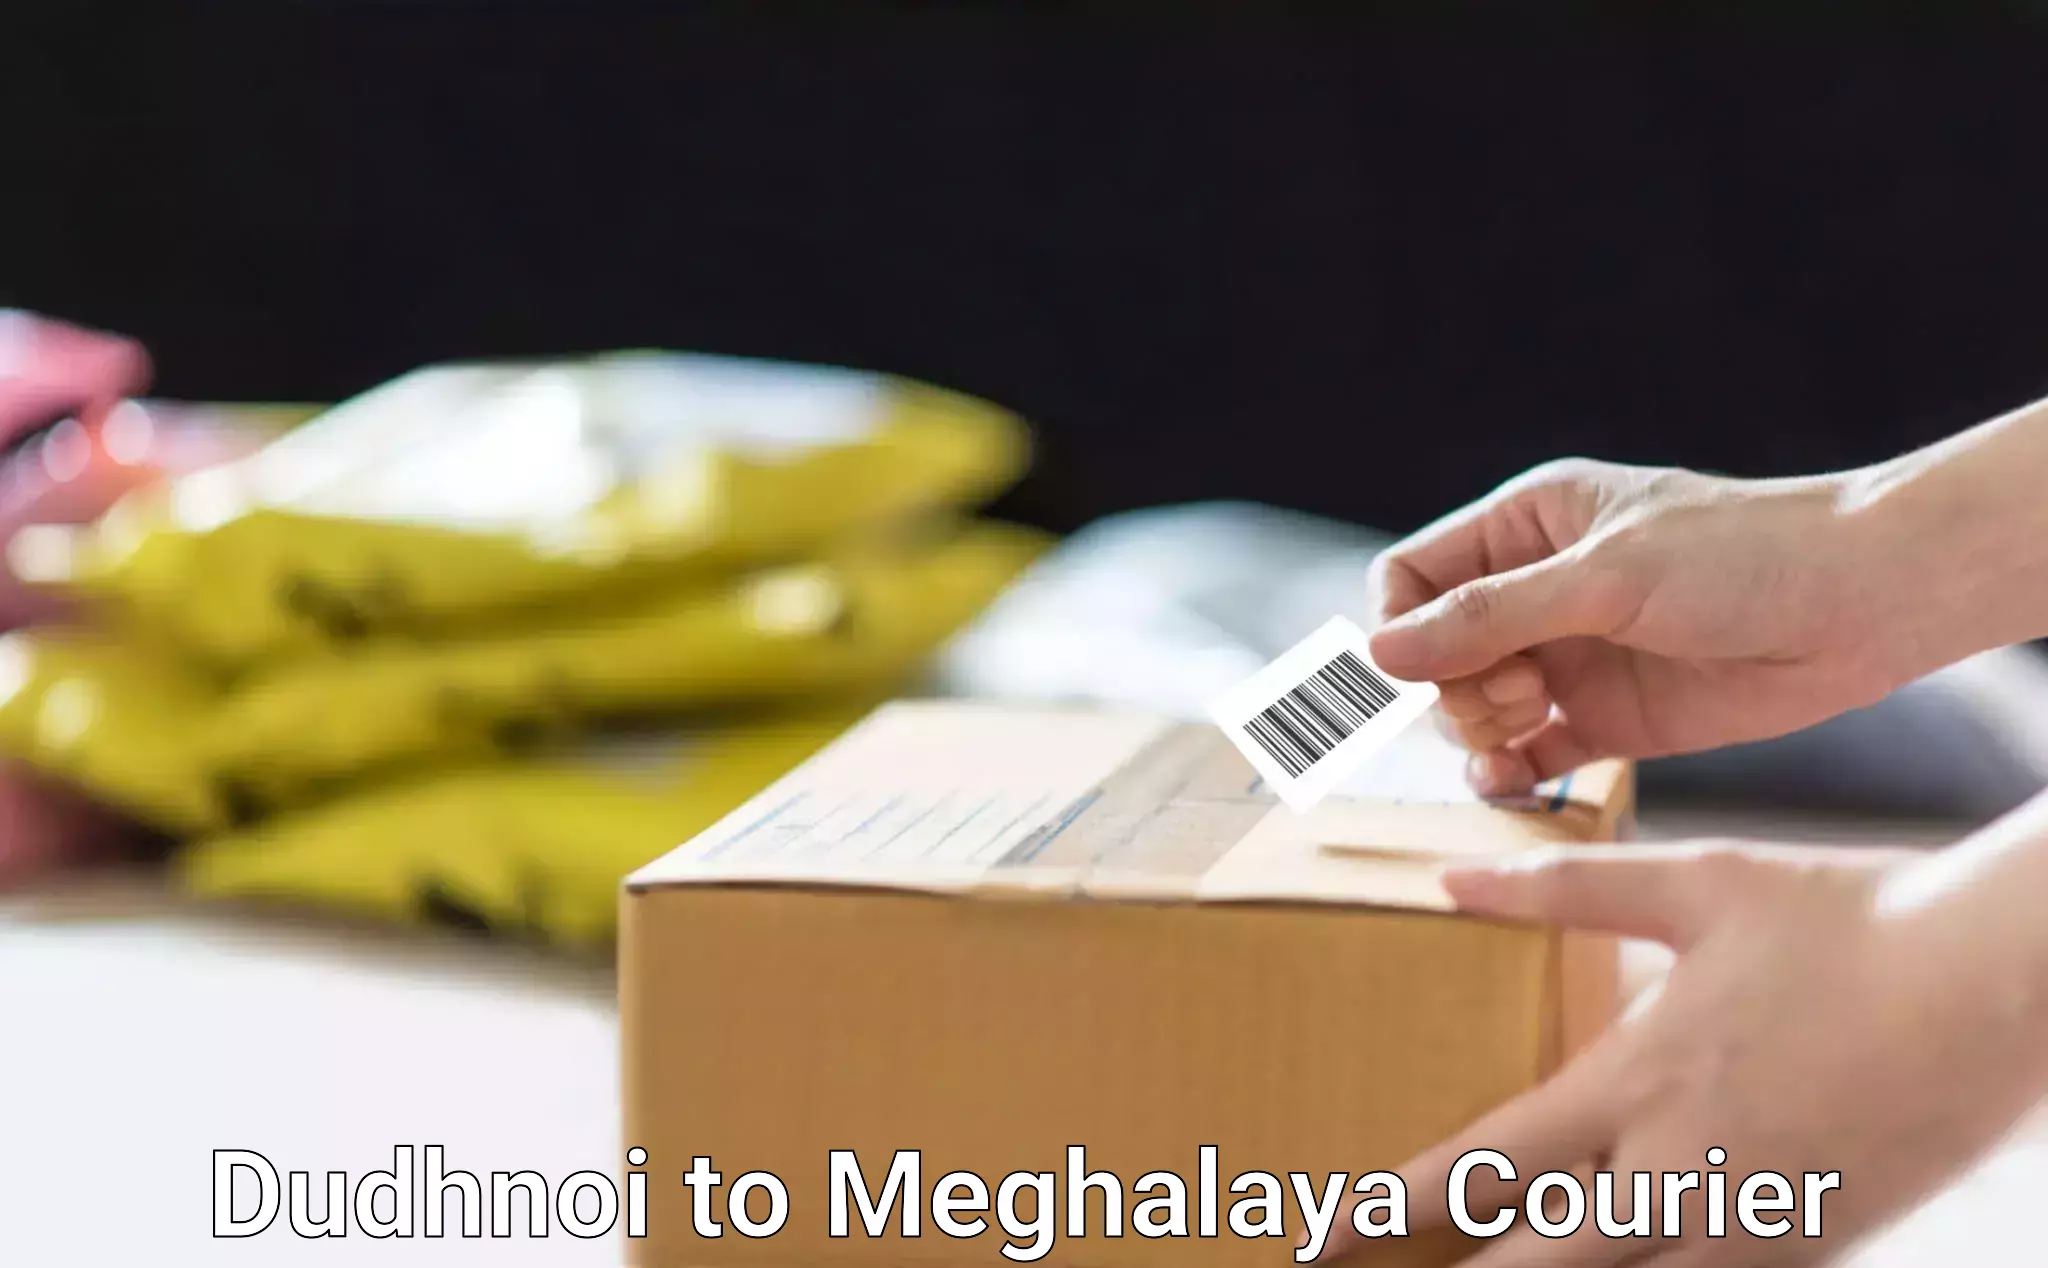 Discounted shipping Dudhnoi to Meghalaya